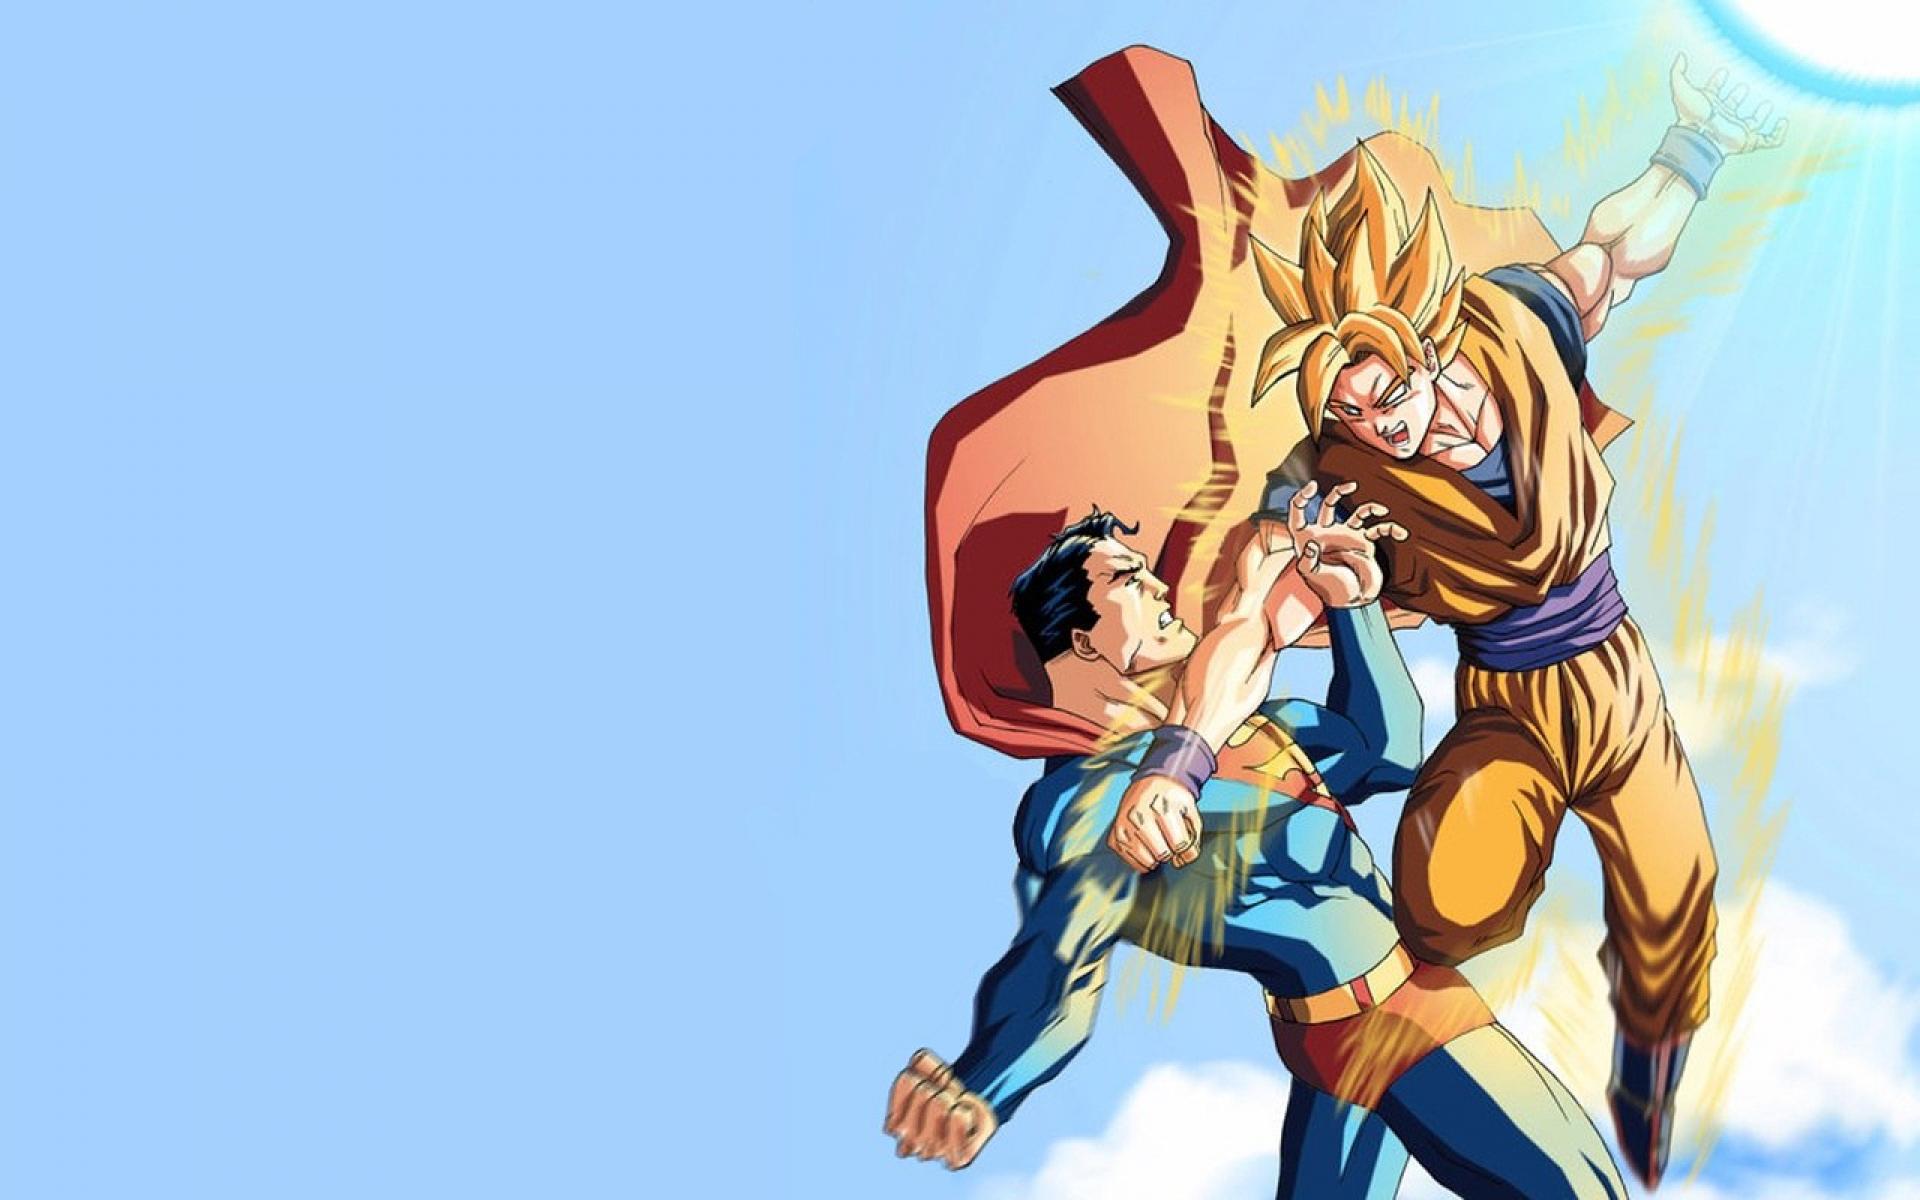 of Goku 4K wallpaper for your desktop or mobile screen